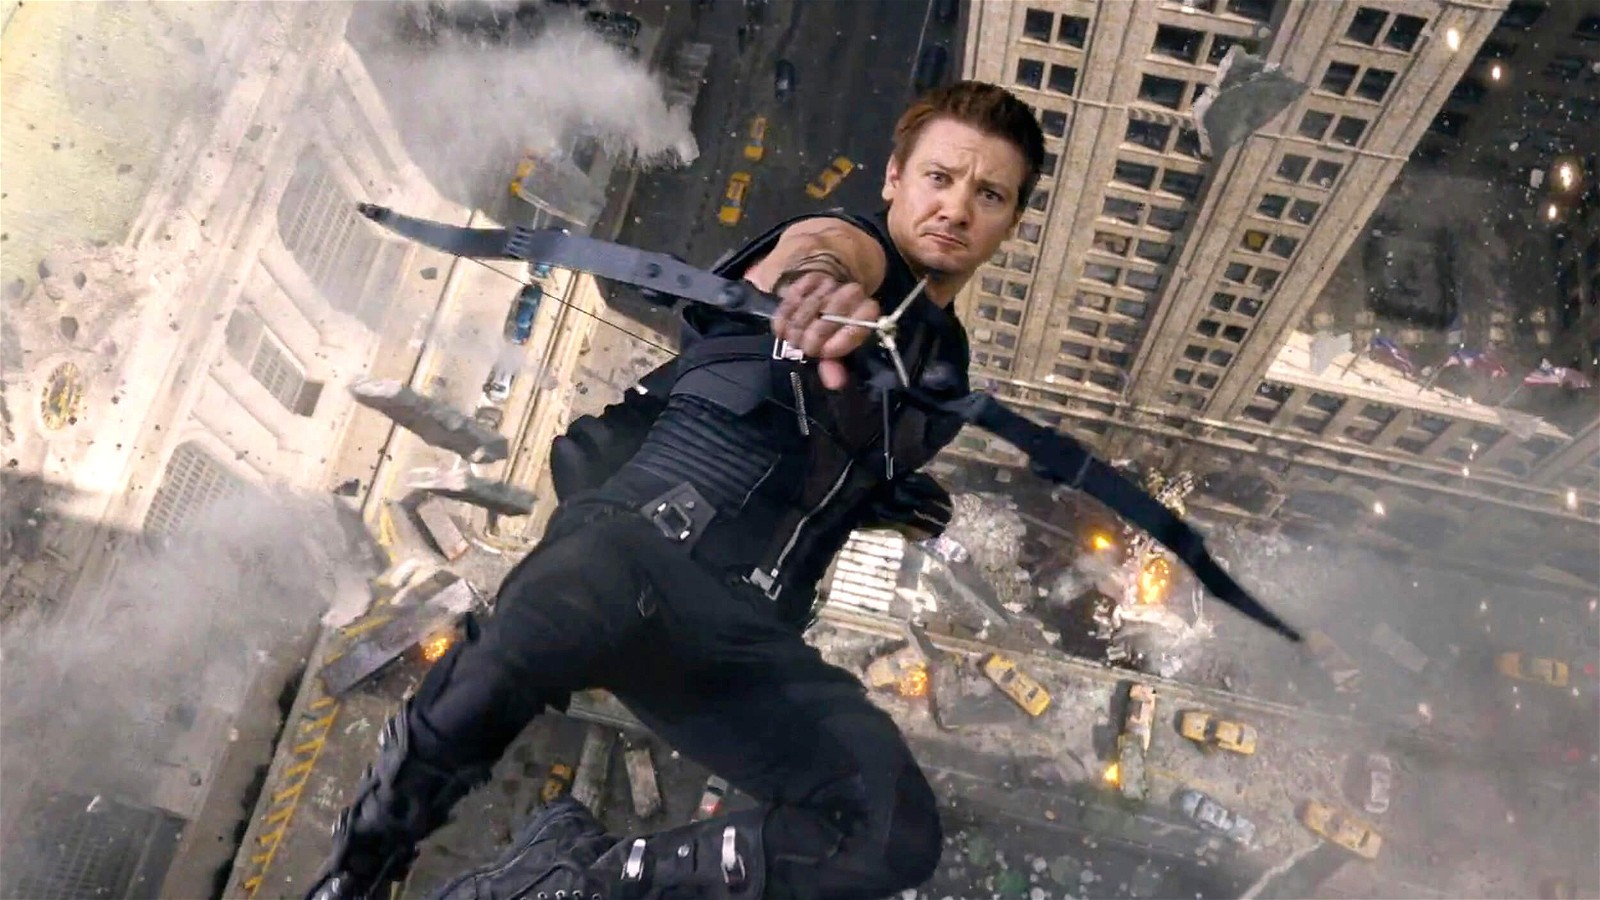 Jeremy Renner as Hawkeye in The Avengers (2012)